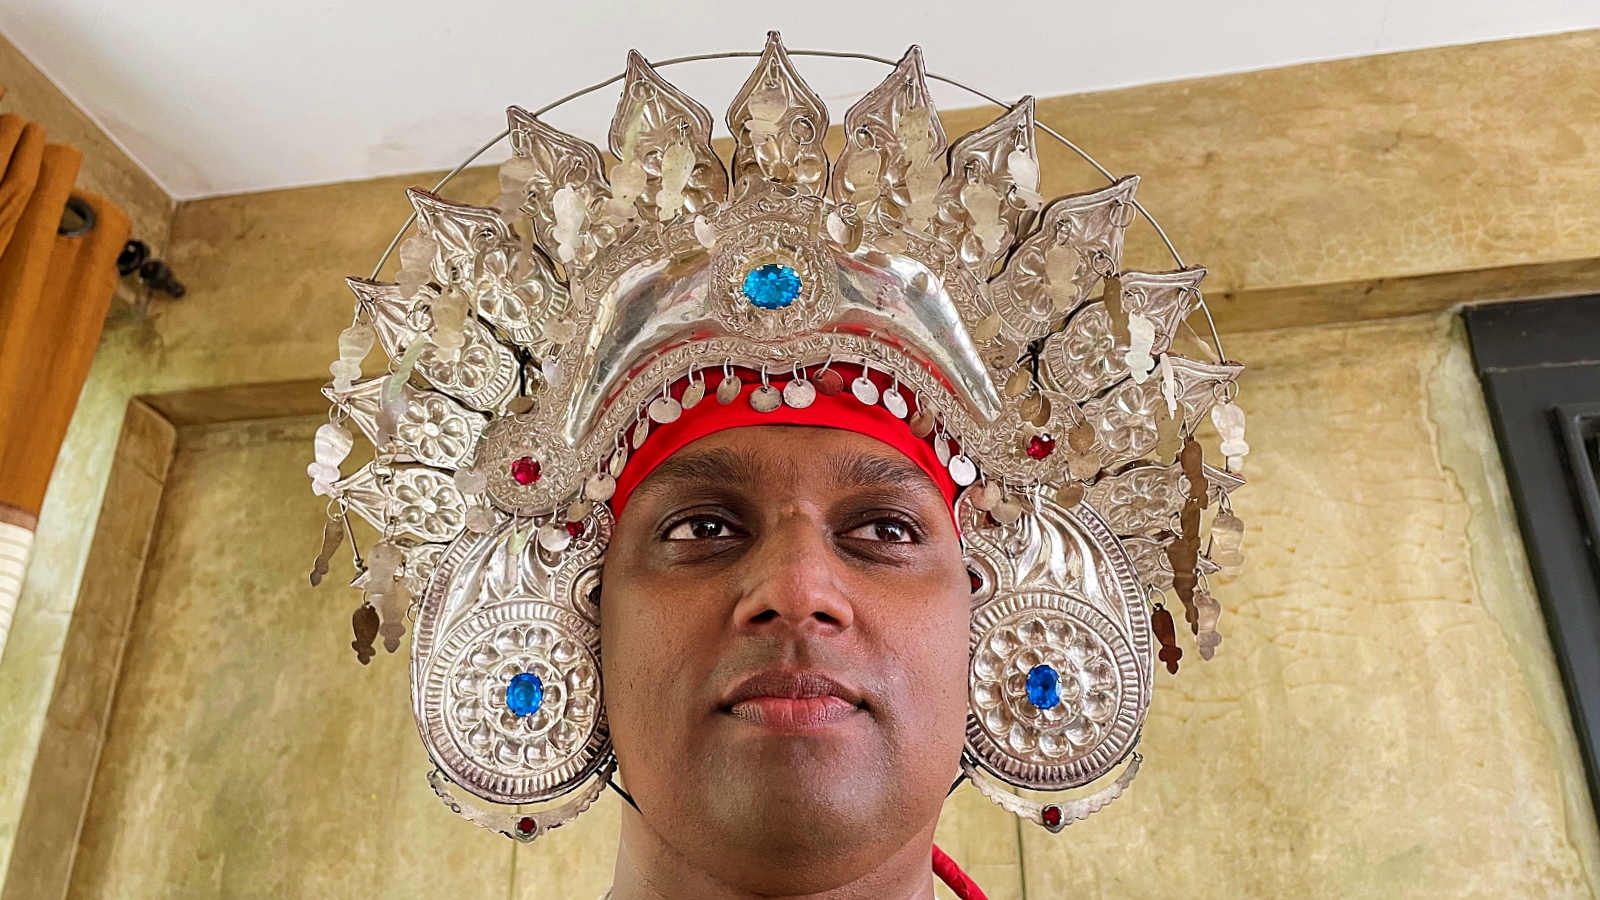 Kandyan headdresses and jewellery